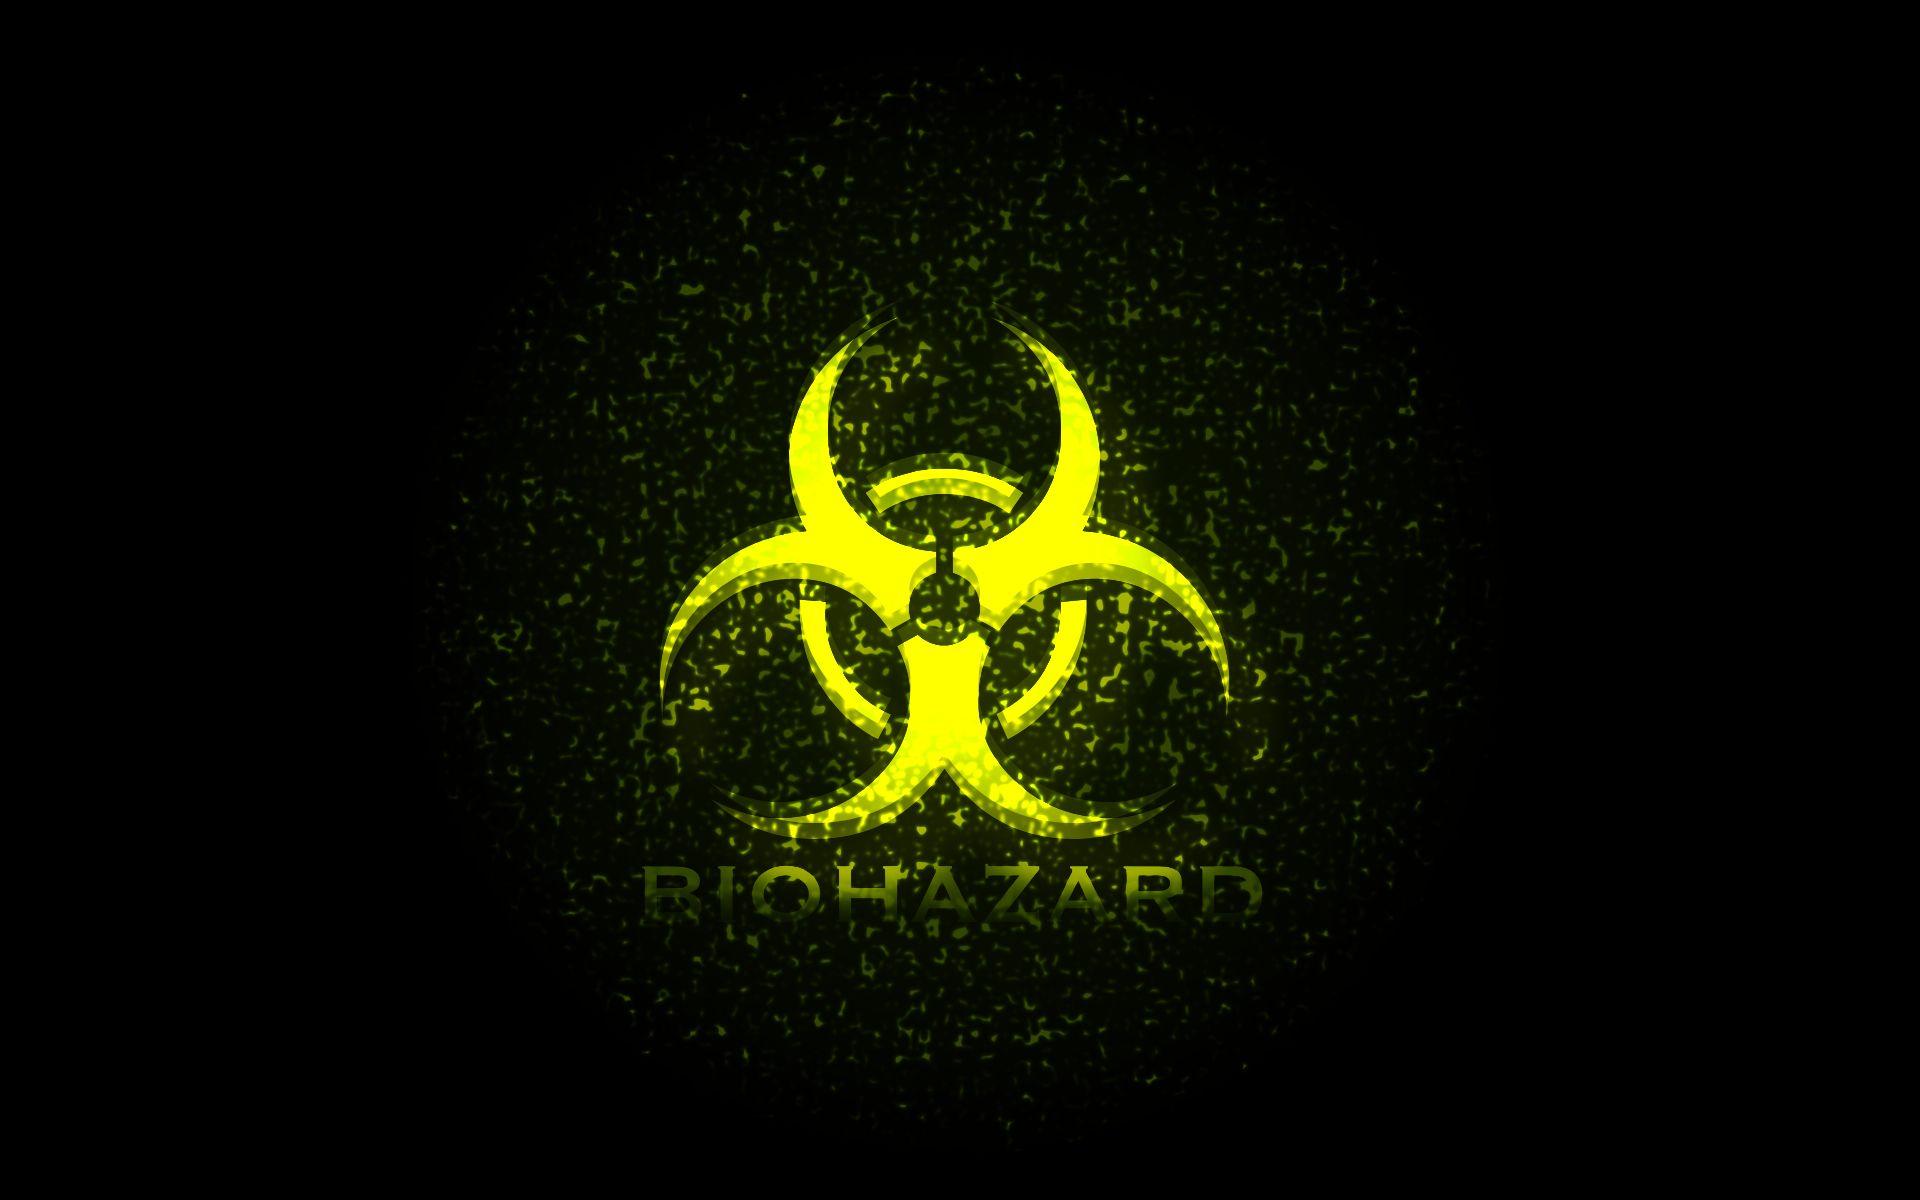 Wallpaper.wiki Awesome Biohazard Symbol Background PIC WPB0014941